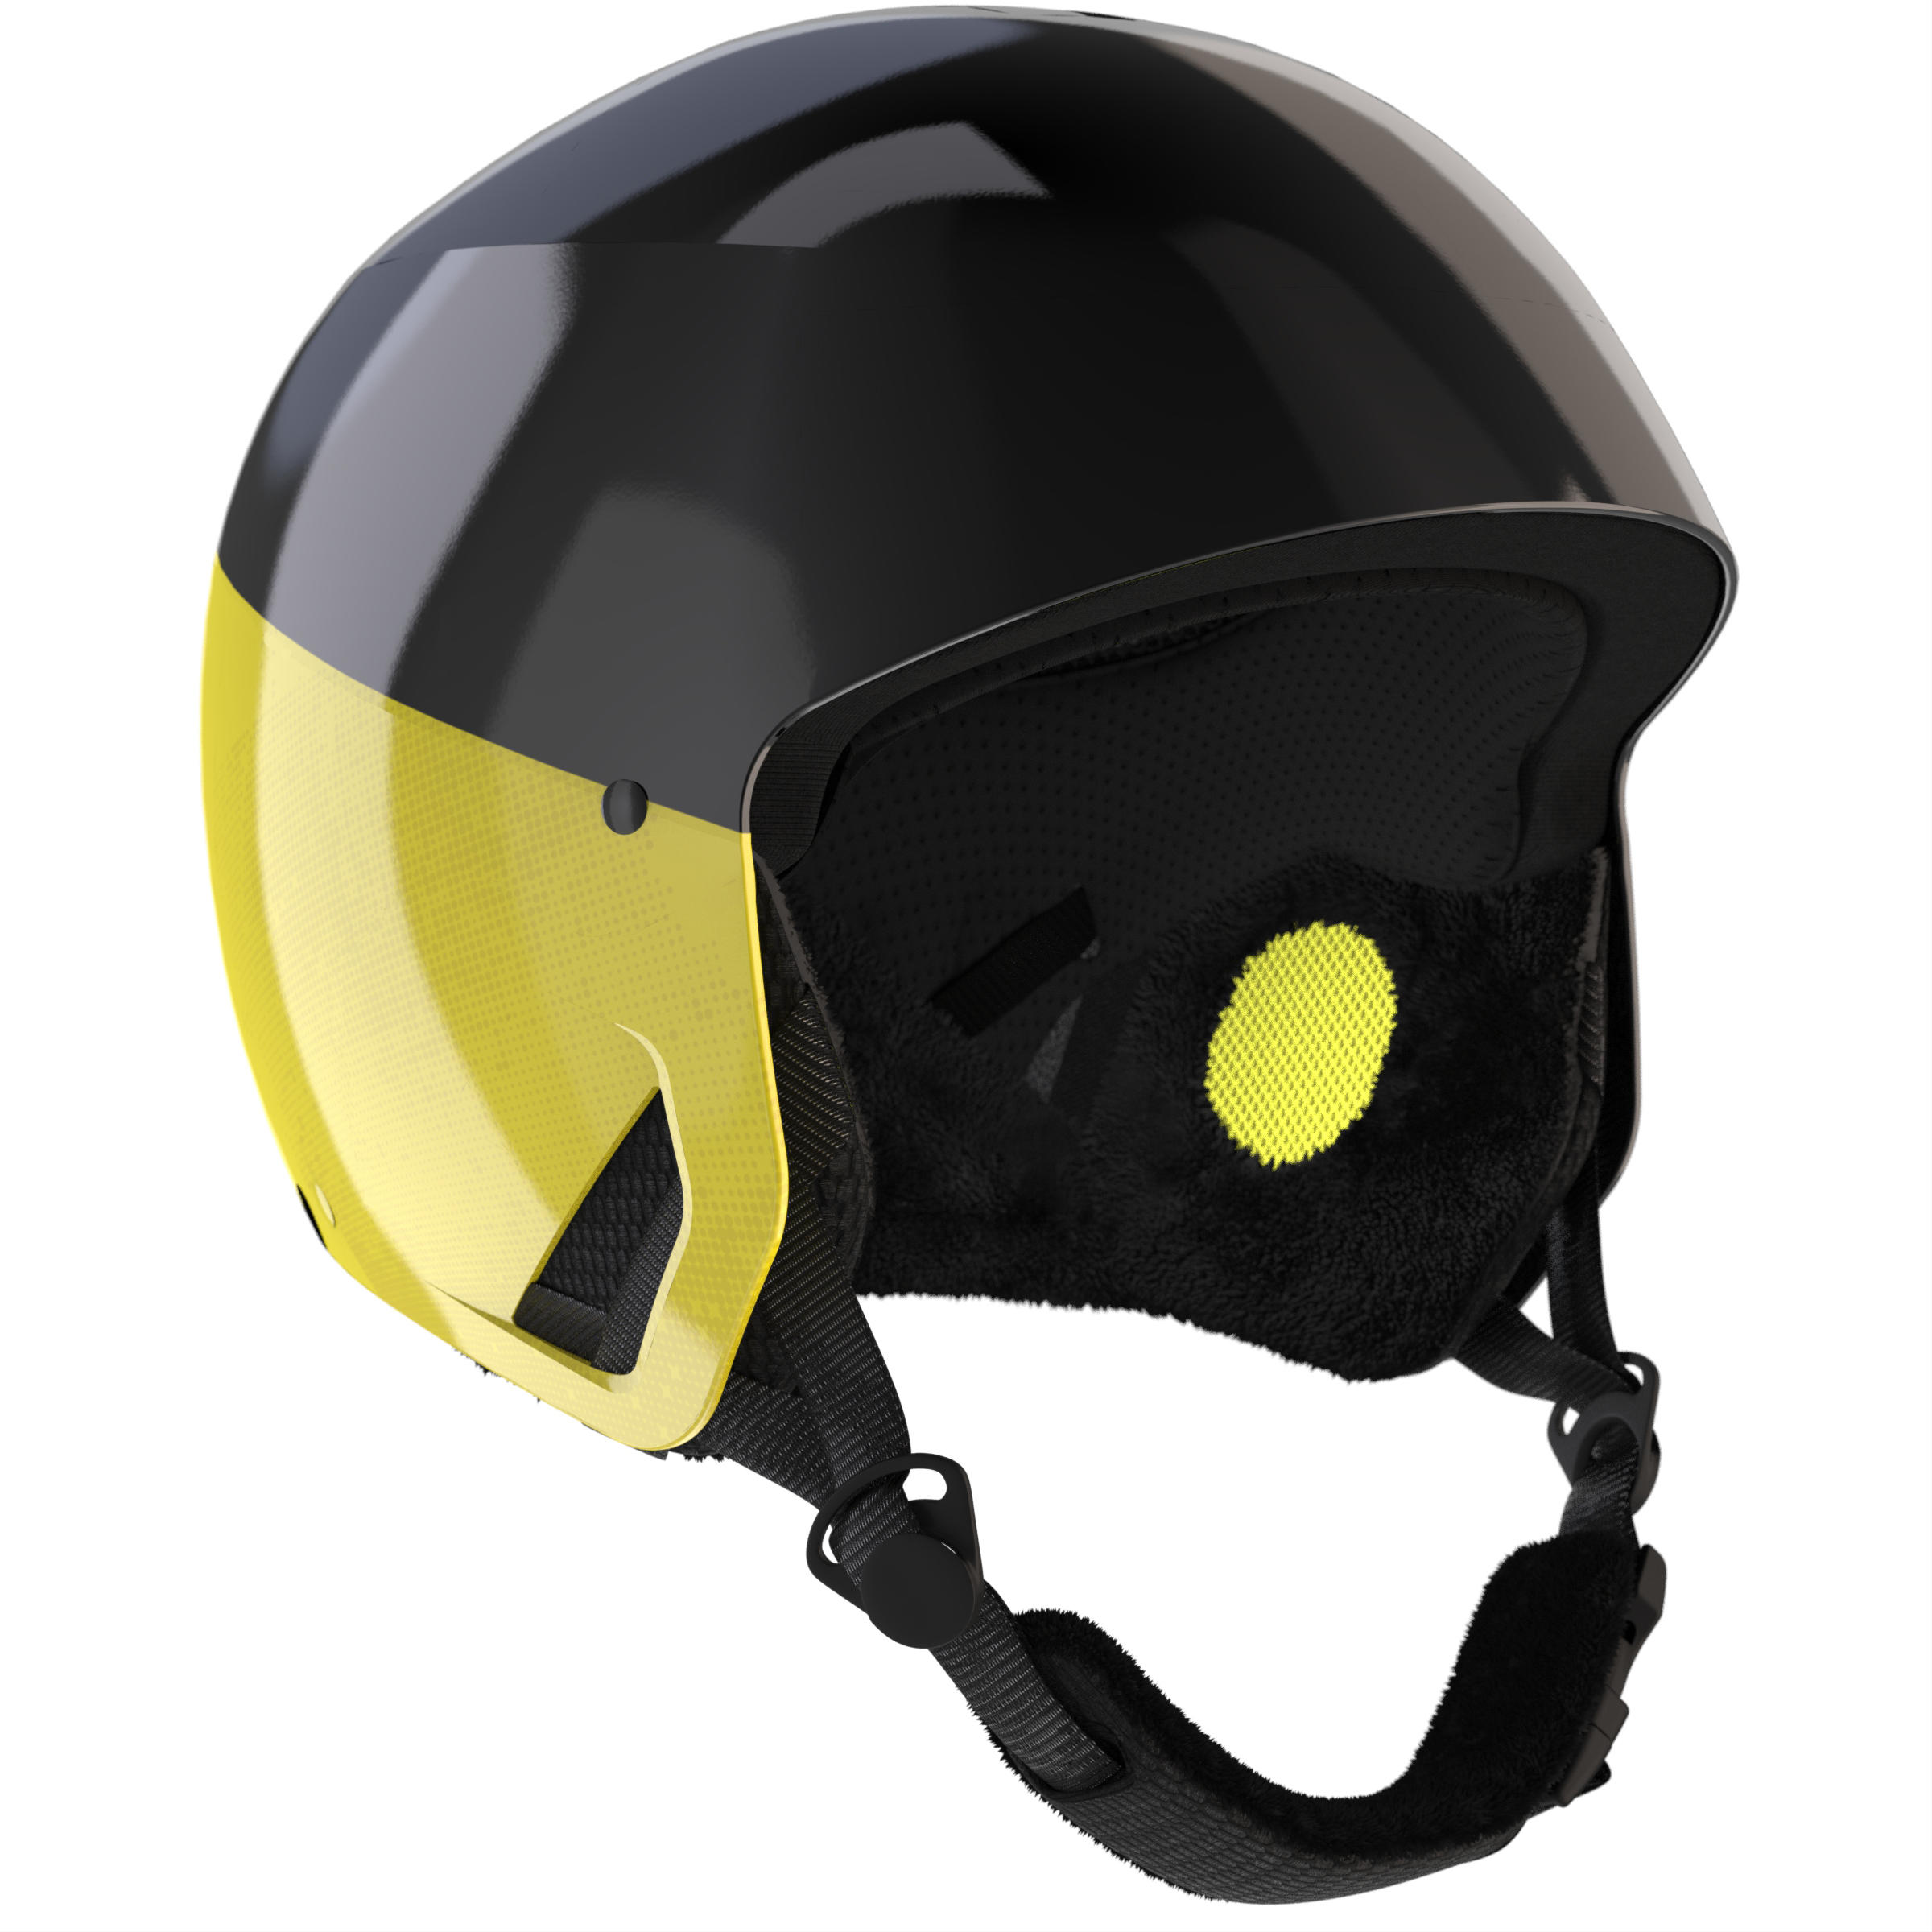 WEDZE Adult Downhill Ski Helmet HRC500 - Black and Yellow